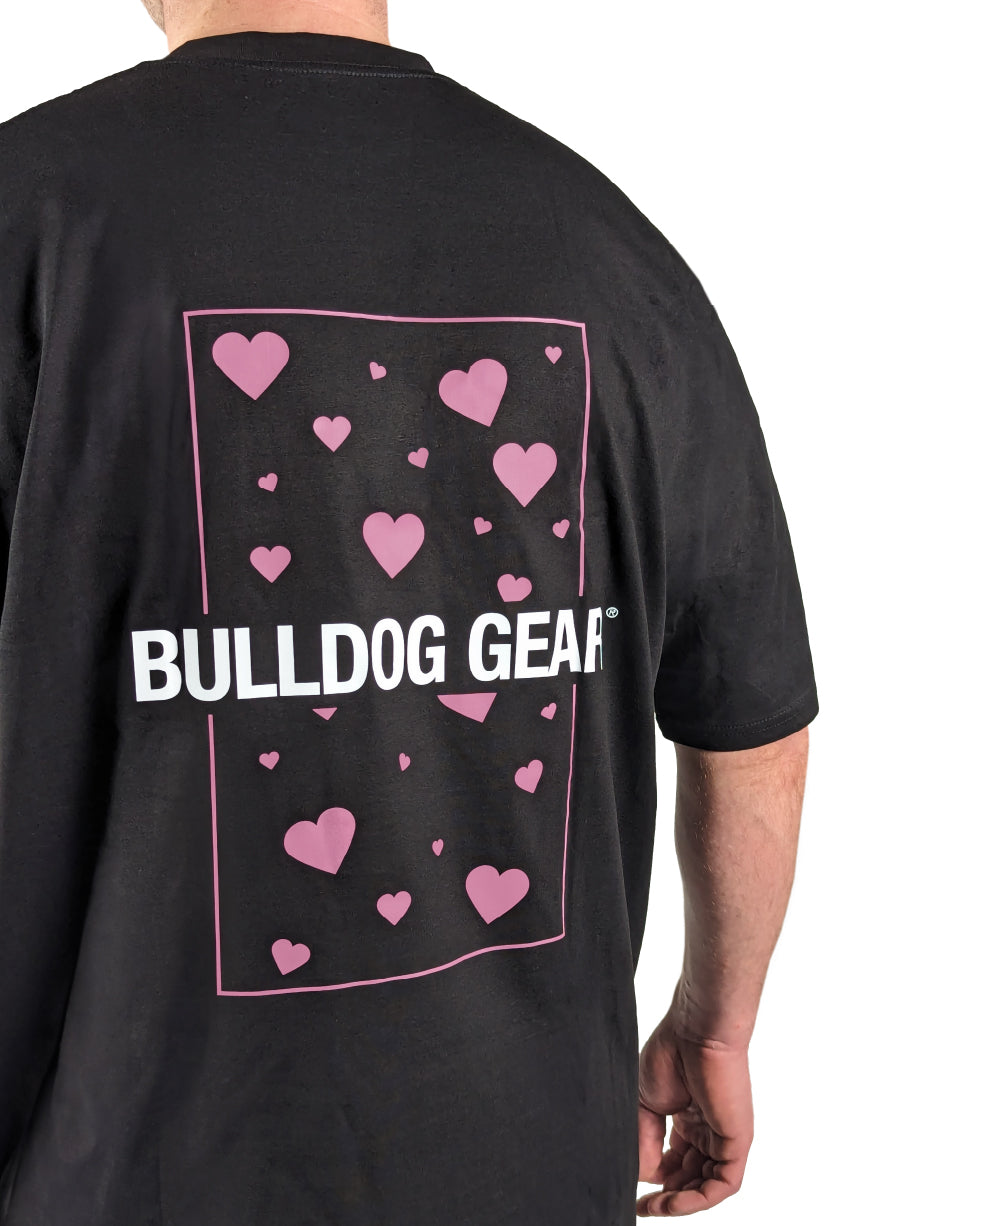 Limited edition bulldog Gear T shirt